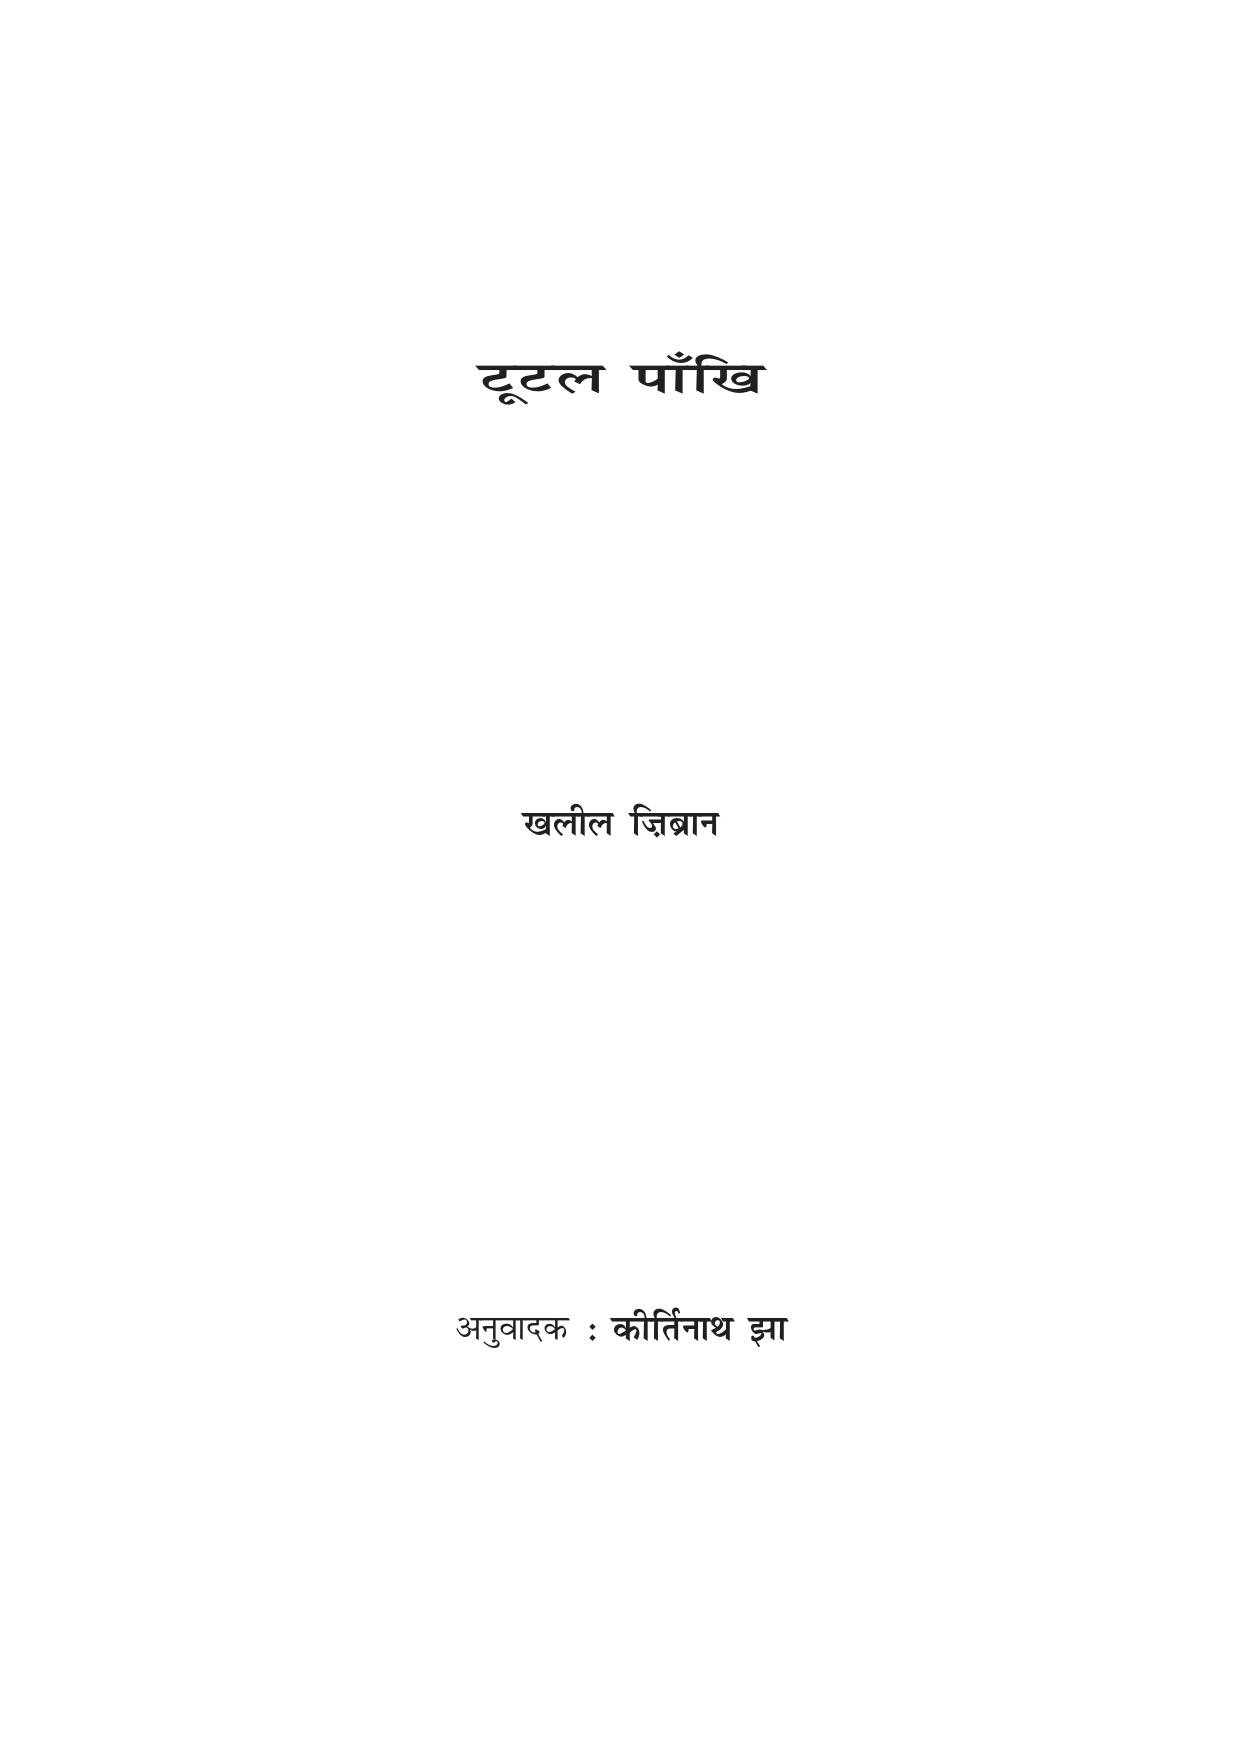 K. Gibran, Tutal Paankhi (The Broken Wings), translated into Maithili by Kirti Nath Jha, 2016.